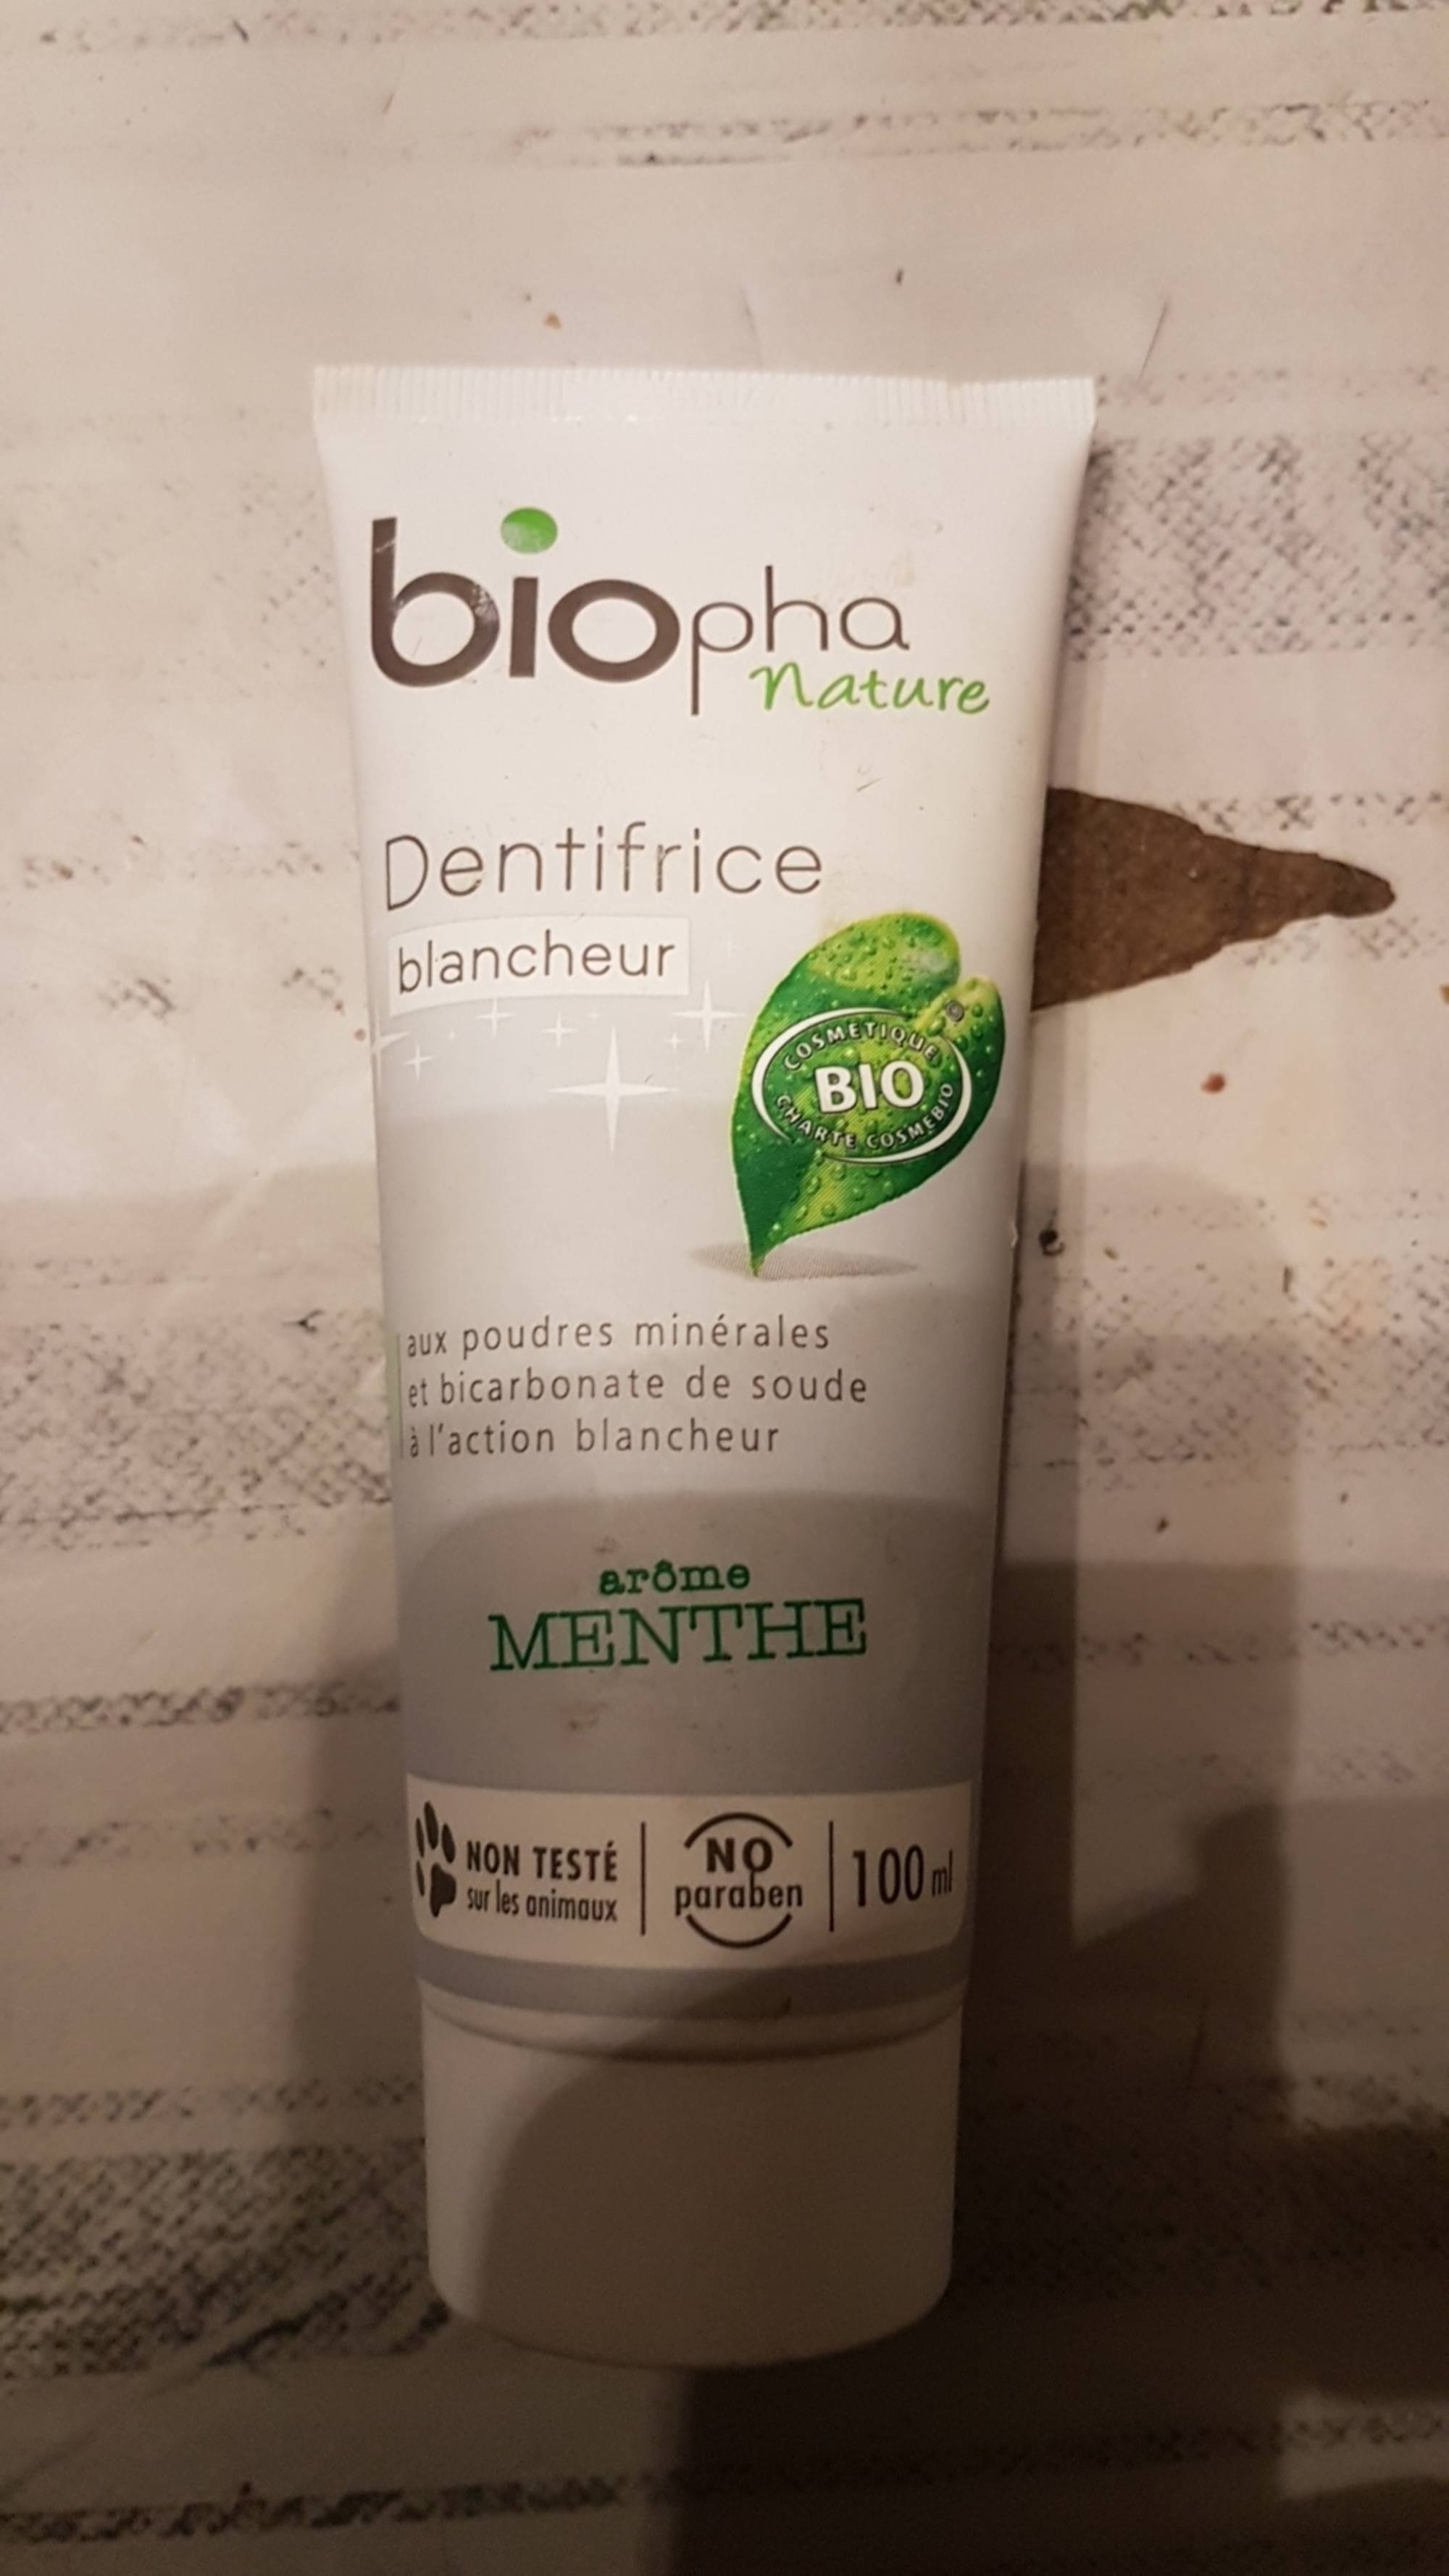 BIOPHA - Biopha nature - Dentifrice blancheur